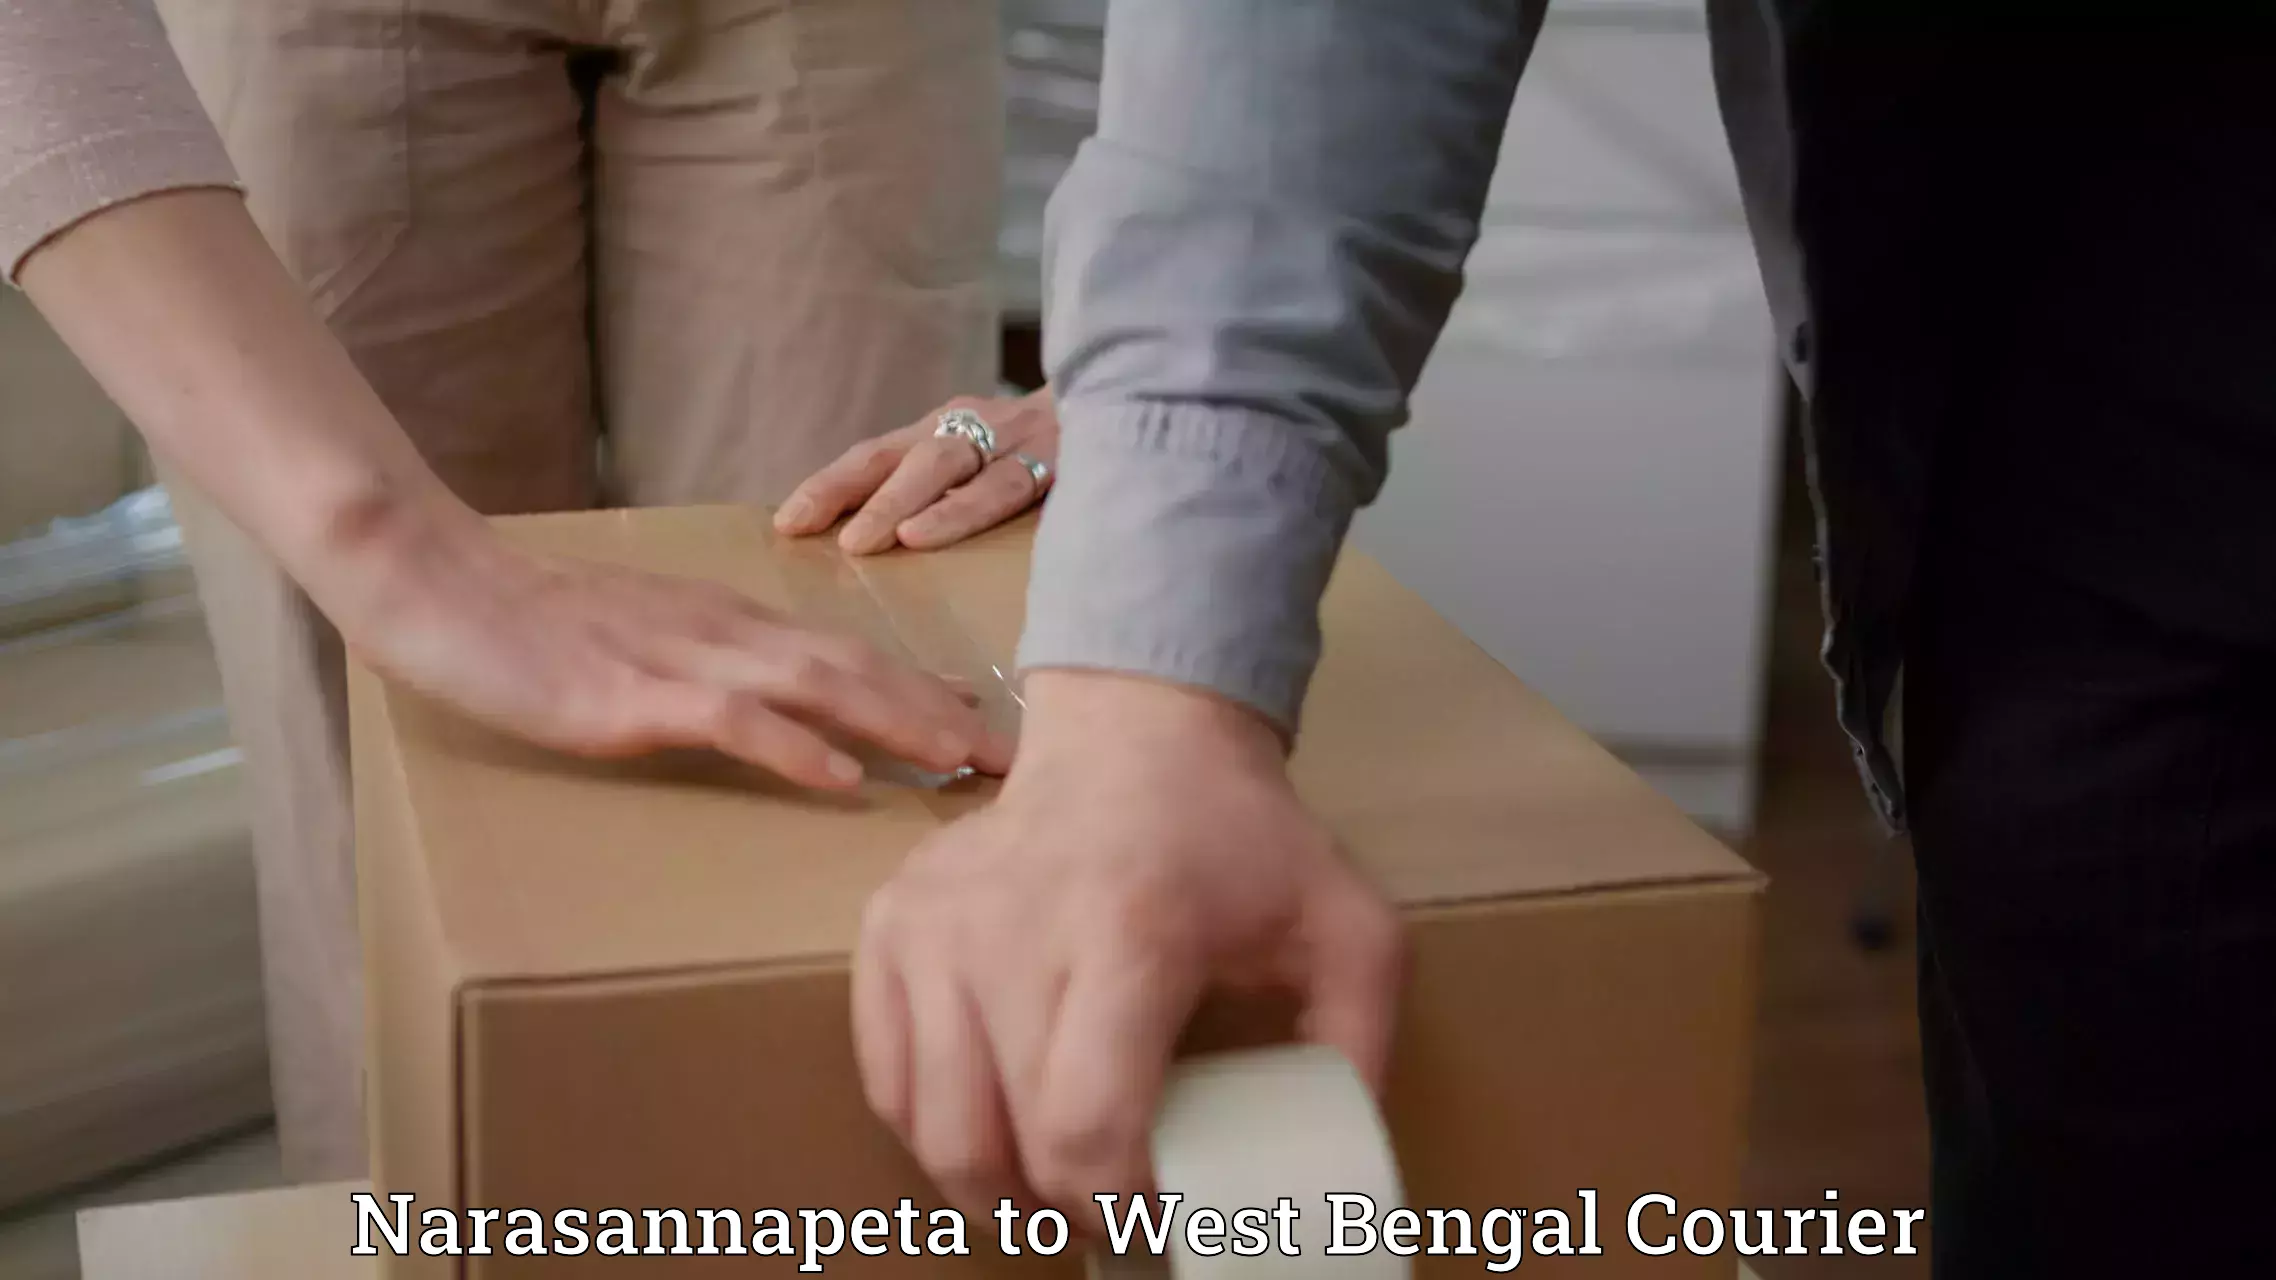 Global logistics network Narasannapeta to West Bengal